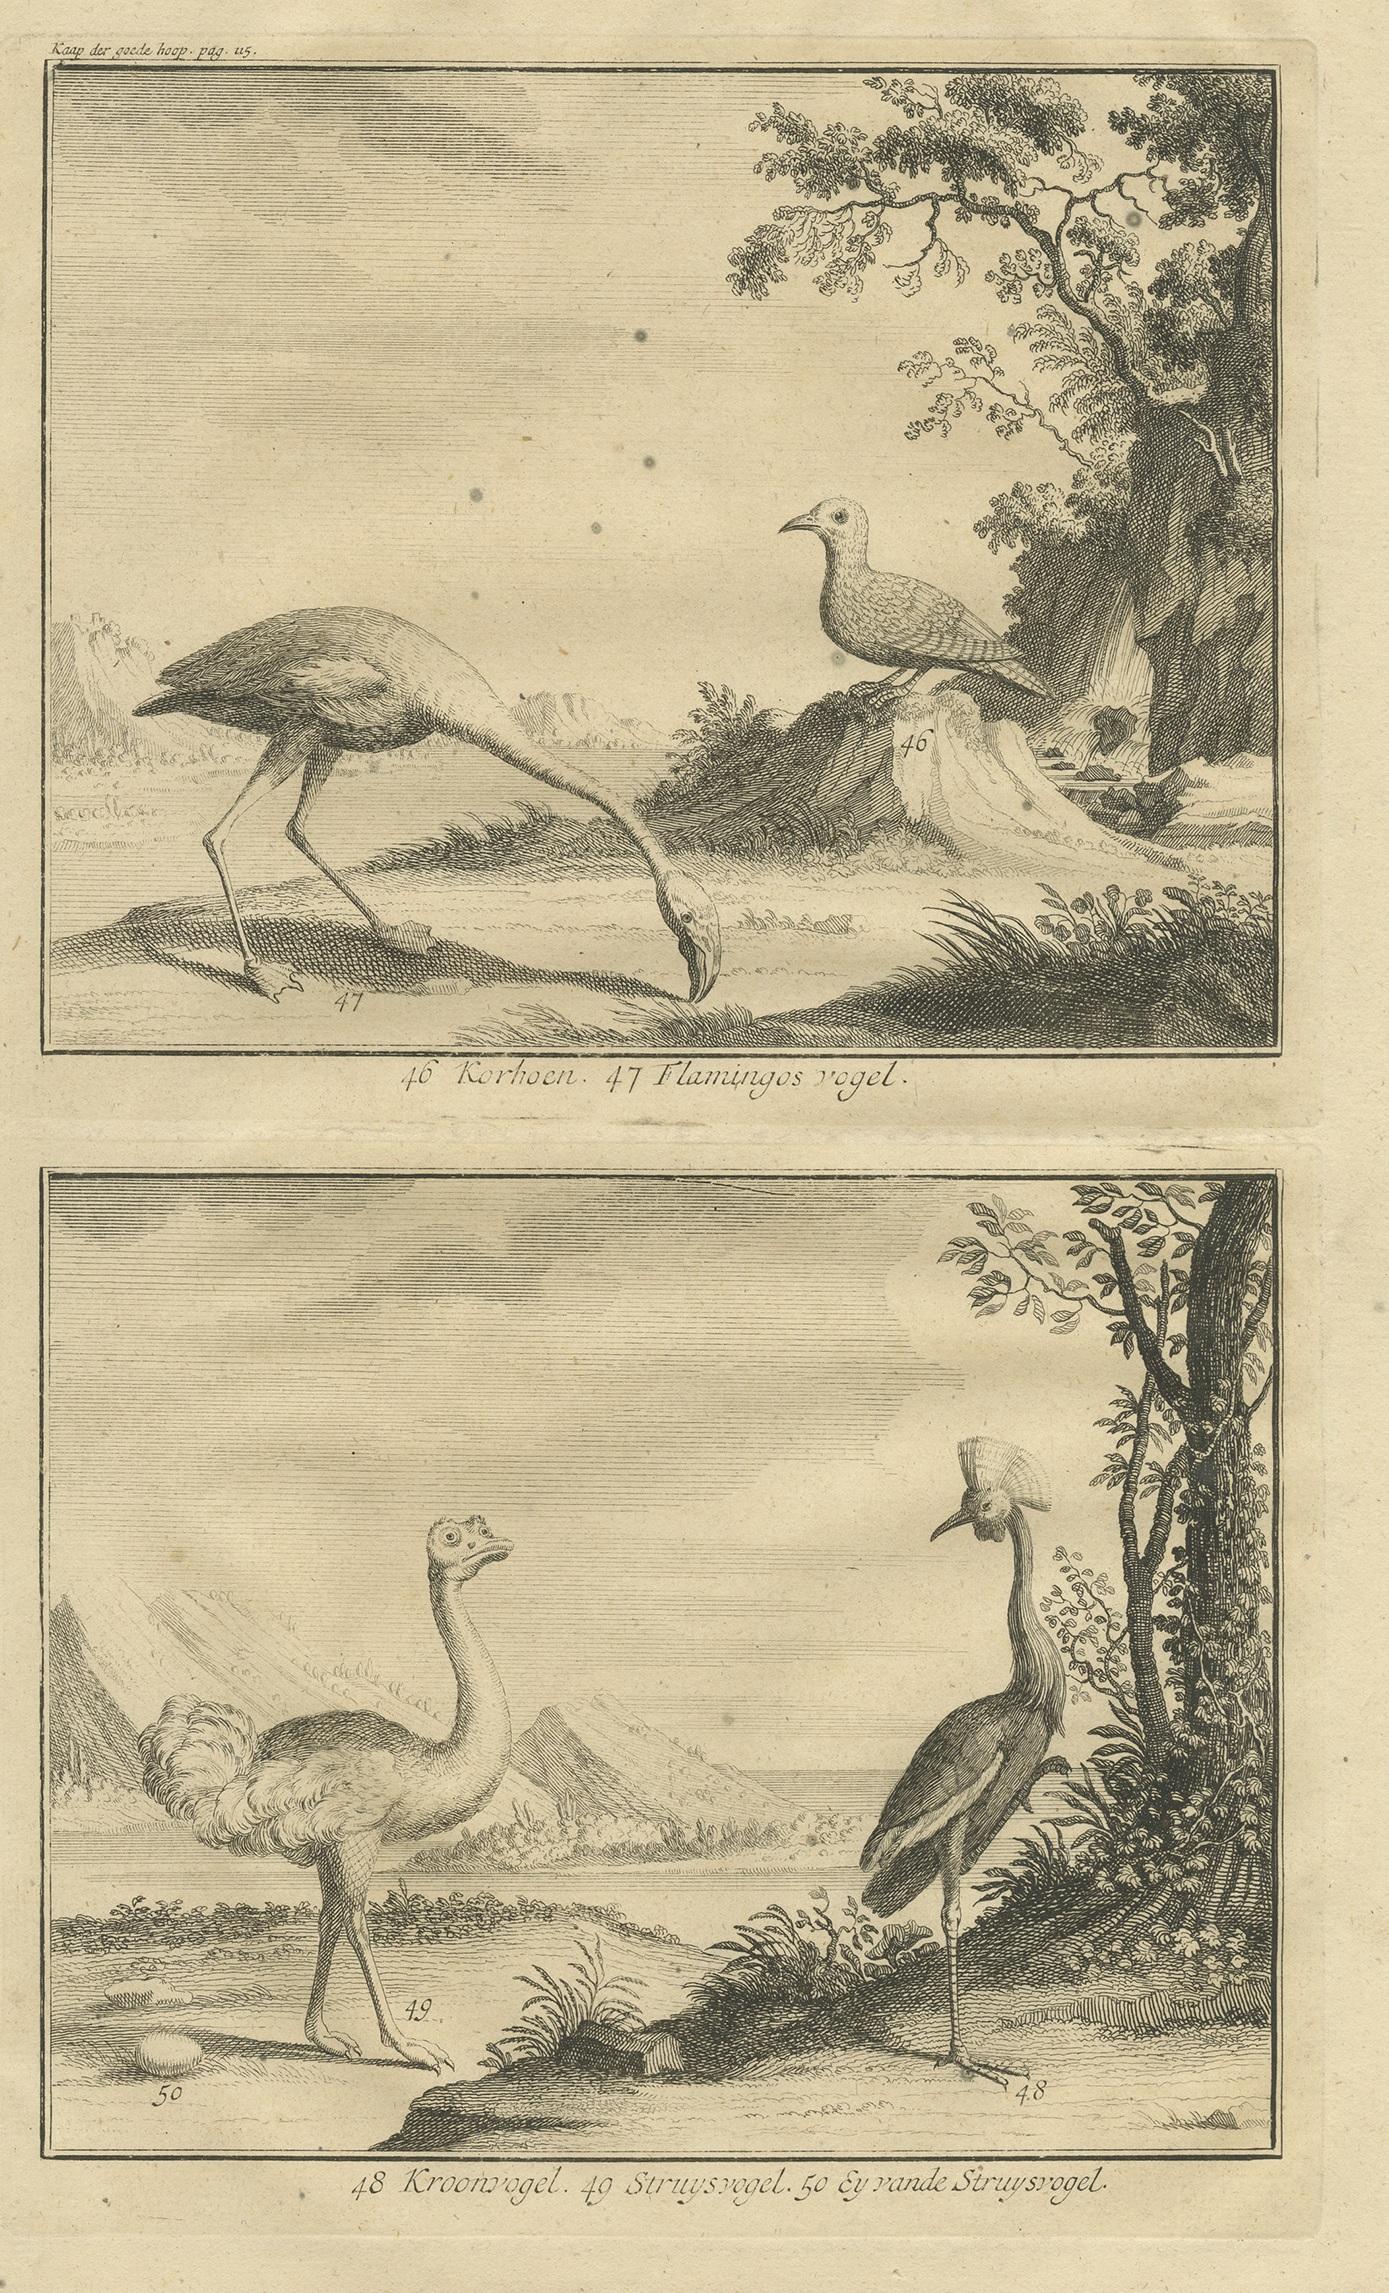 Antique bird print titled '49. Korhoen, 47. Flamingos vogel, 48. Kroonvogel, 49. Struysvogel, 50. Ey van de Struysvogel'. This print depicts the black grouse, the flamingo bird, the grus, ostrich and ostrich egg. This print originates from 'Oud en